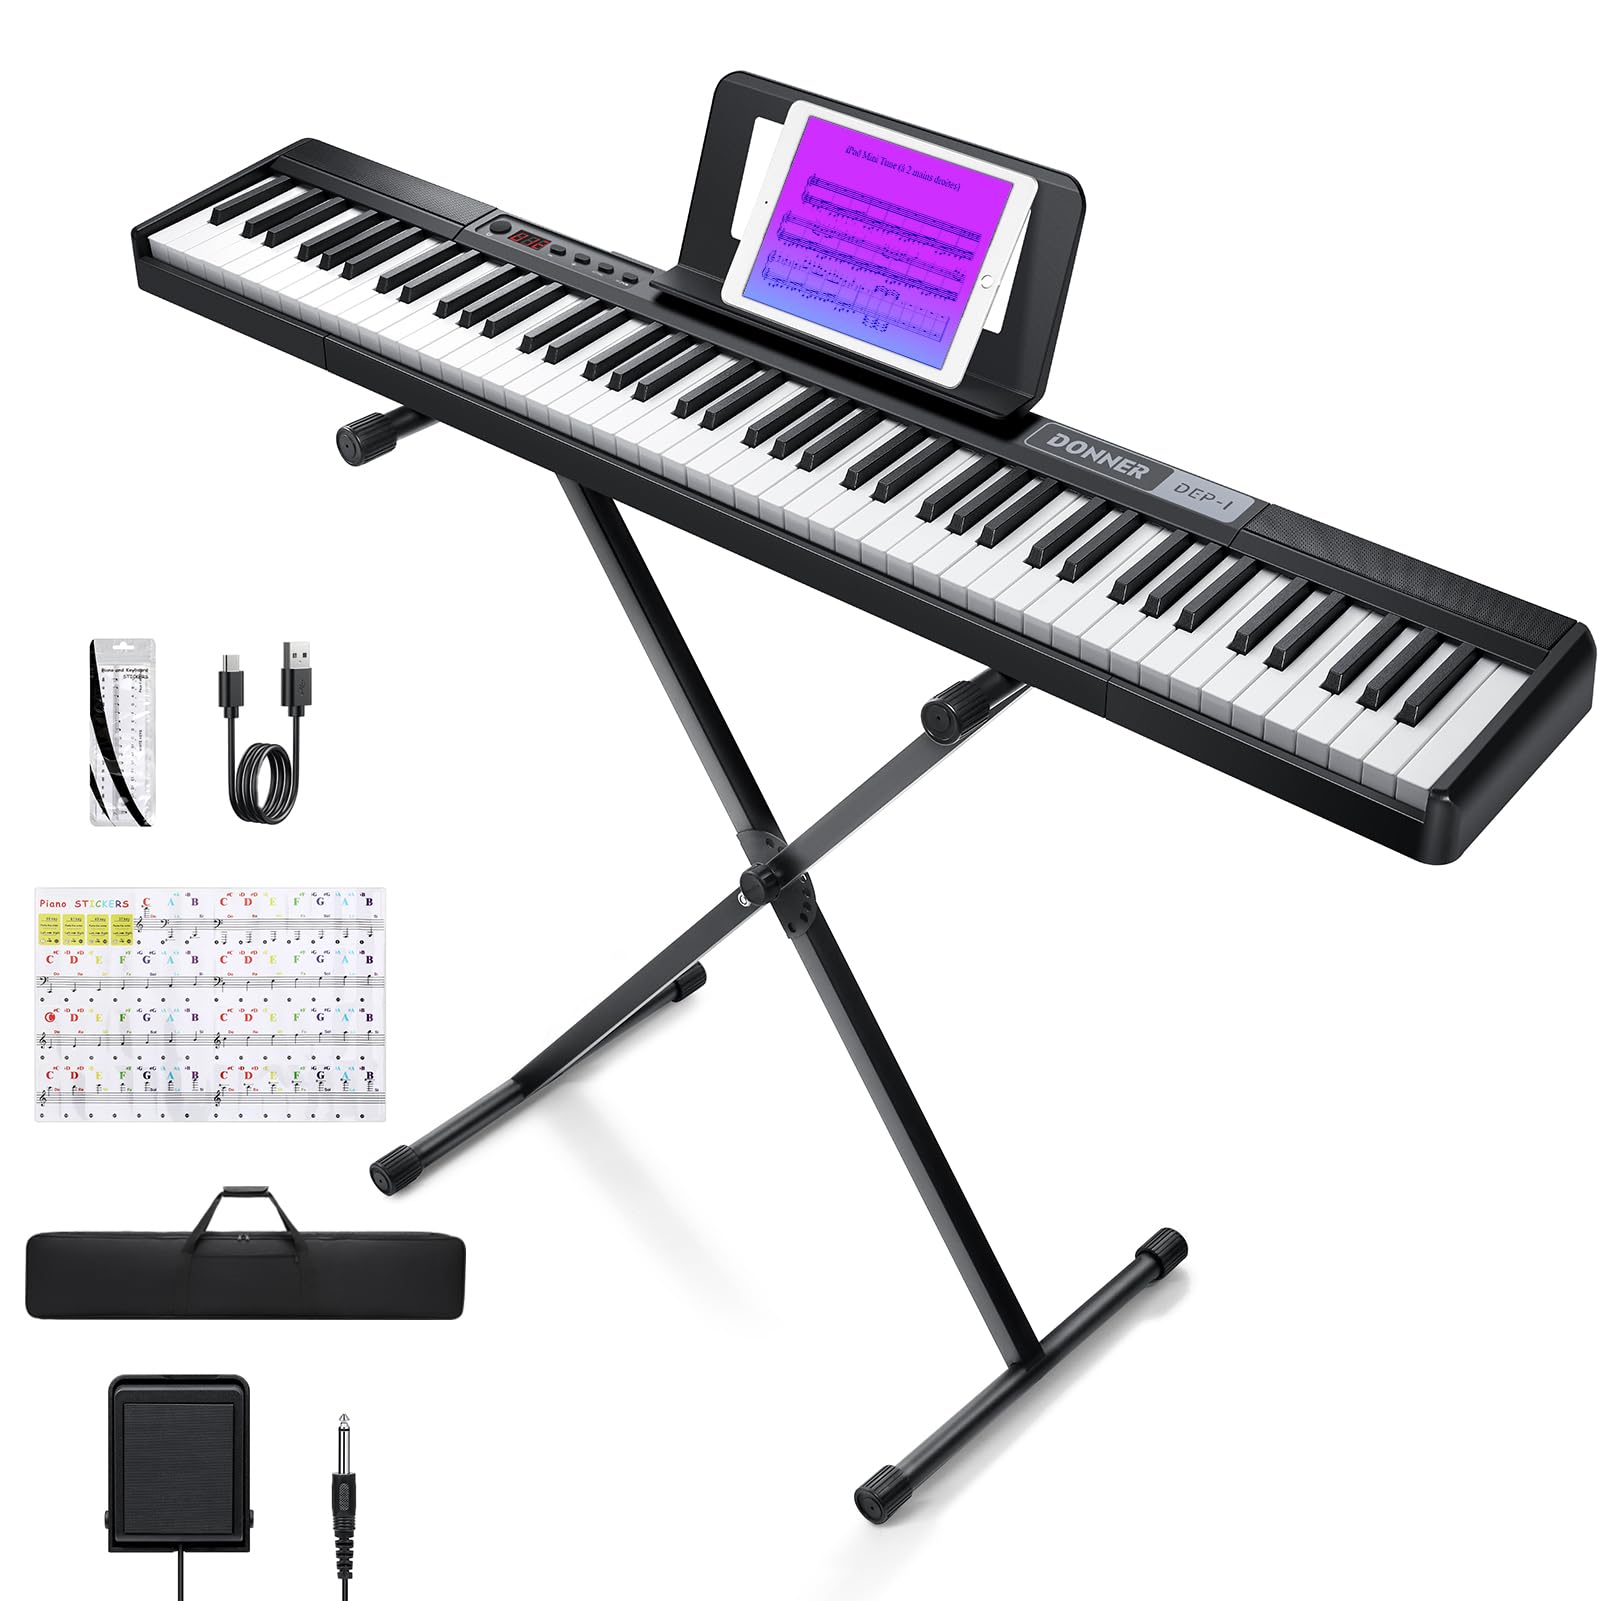 Donner 電子ピアノ 88鍵盤 スタンドセット MIDI対応 充電型 10時間連続利用 コンパクト 軽量 初心者 持ち運びケース ペダル 譜面台 鍵盤シール 日本語説明書付き DEP-1 ブラック